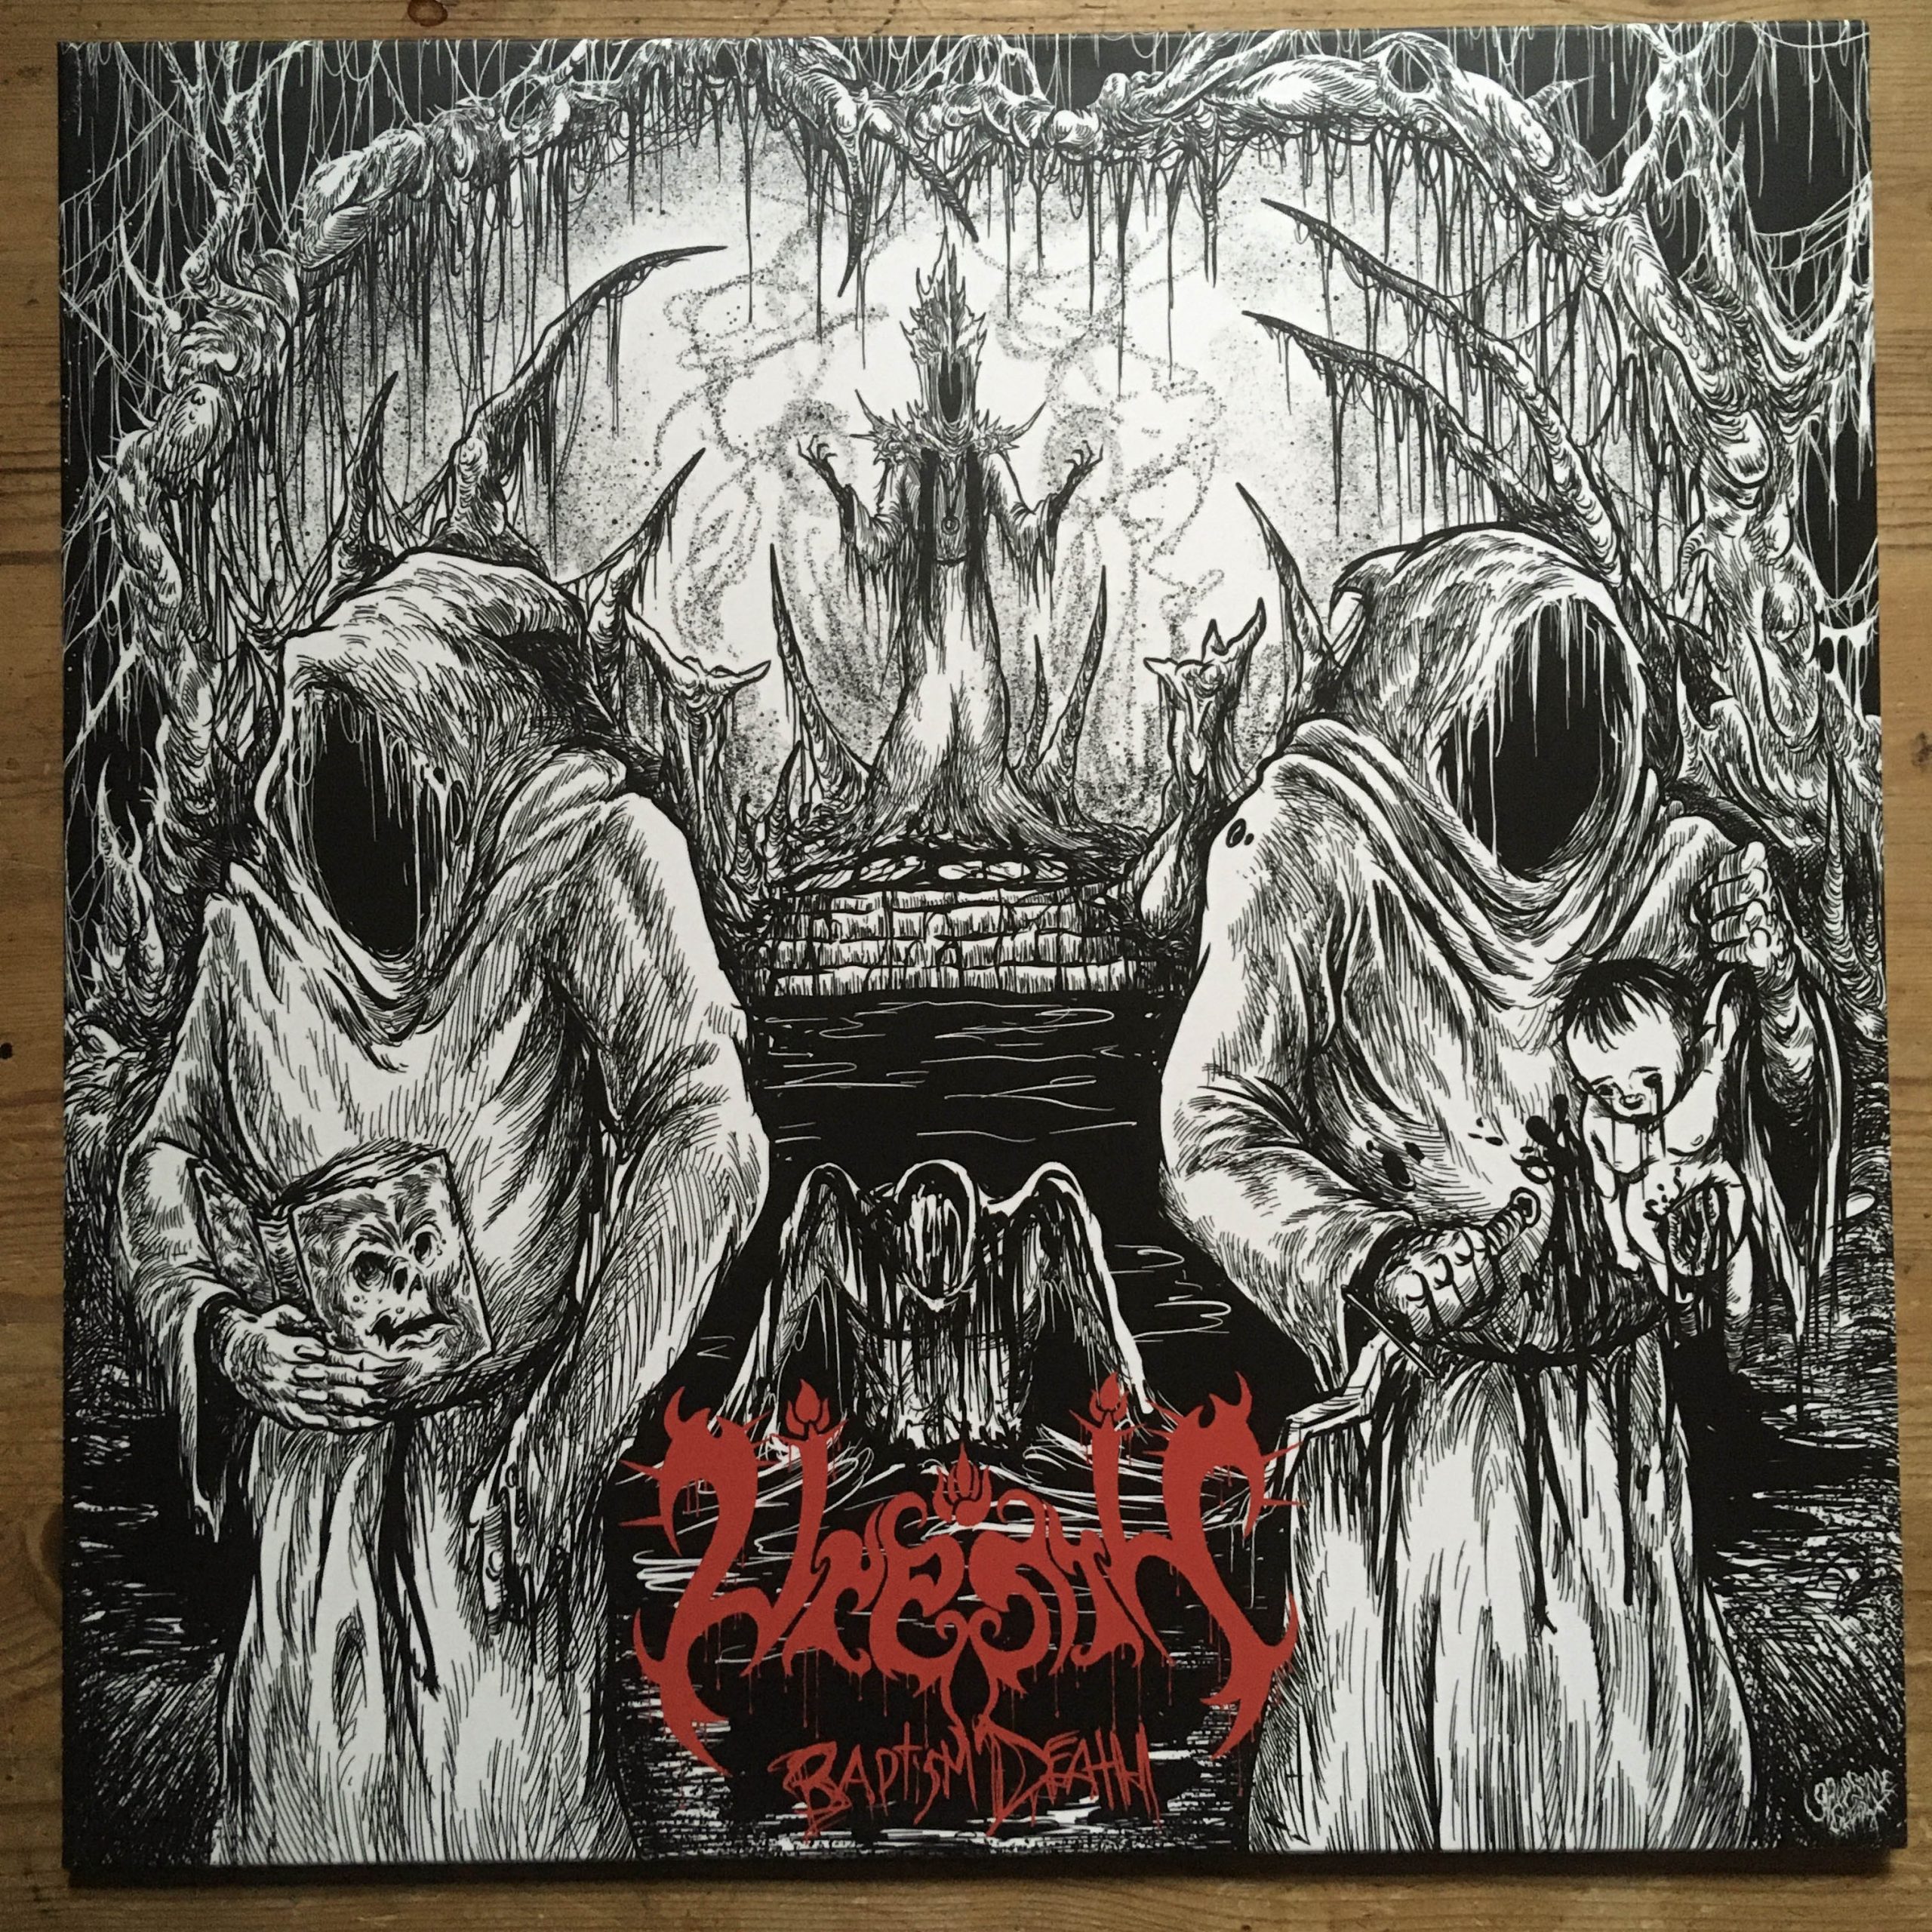 Photo of the Vrenth - "Baptism Death" LP (Black vinyl)